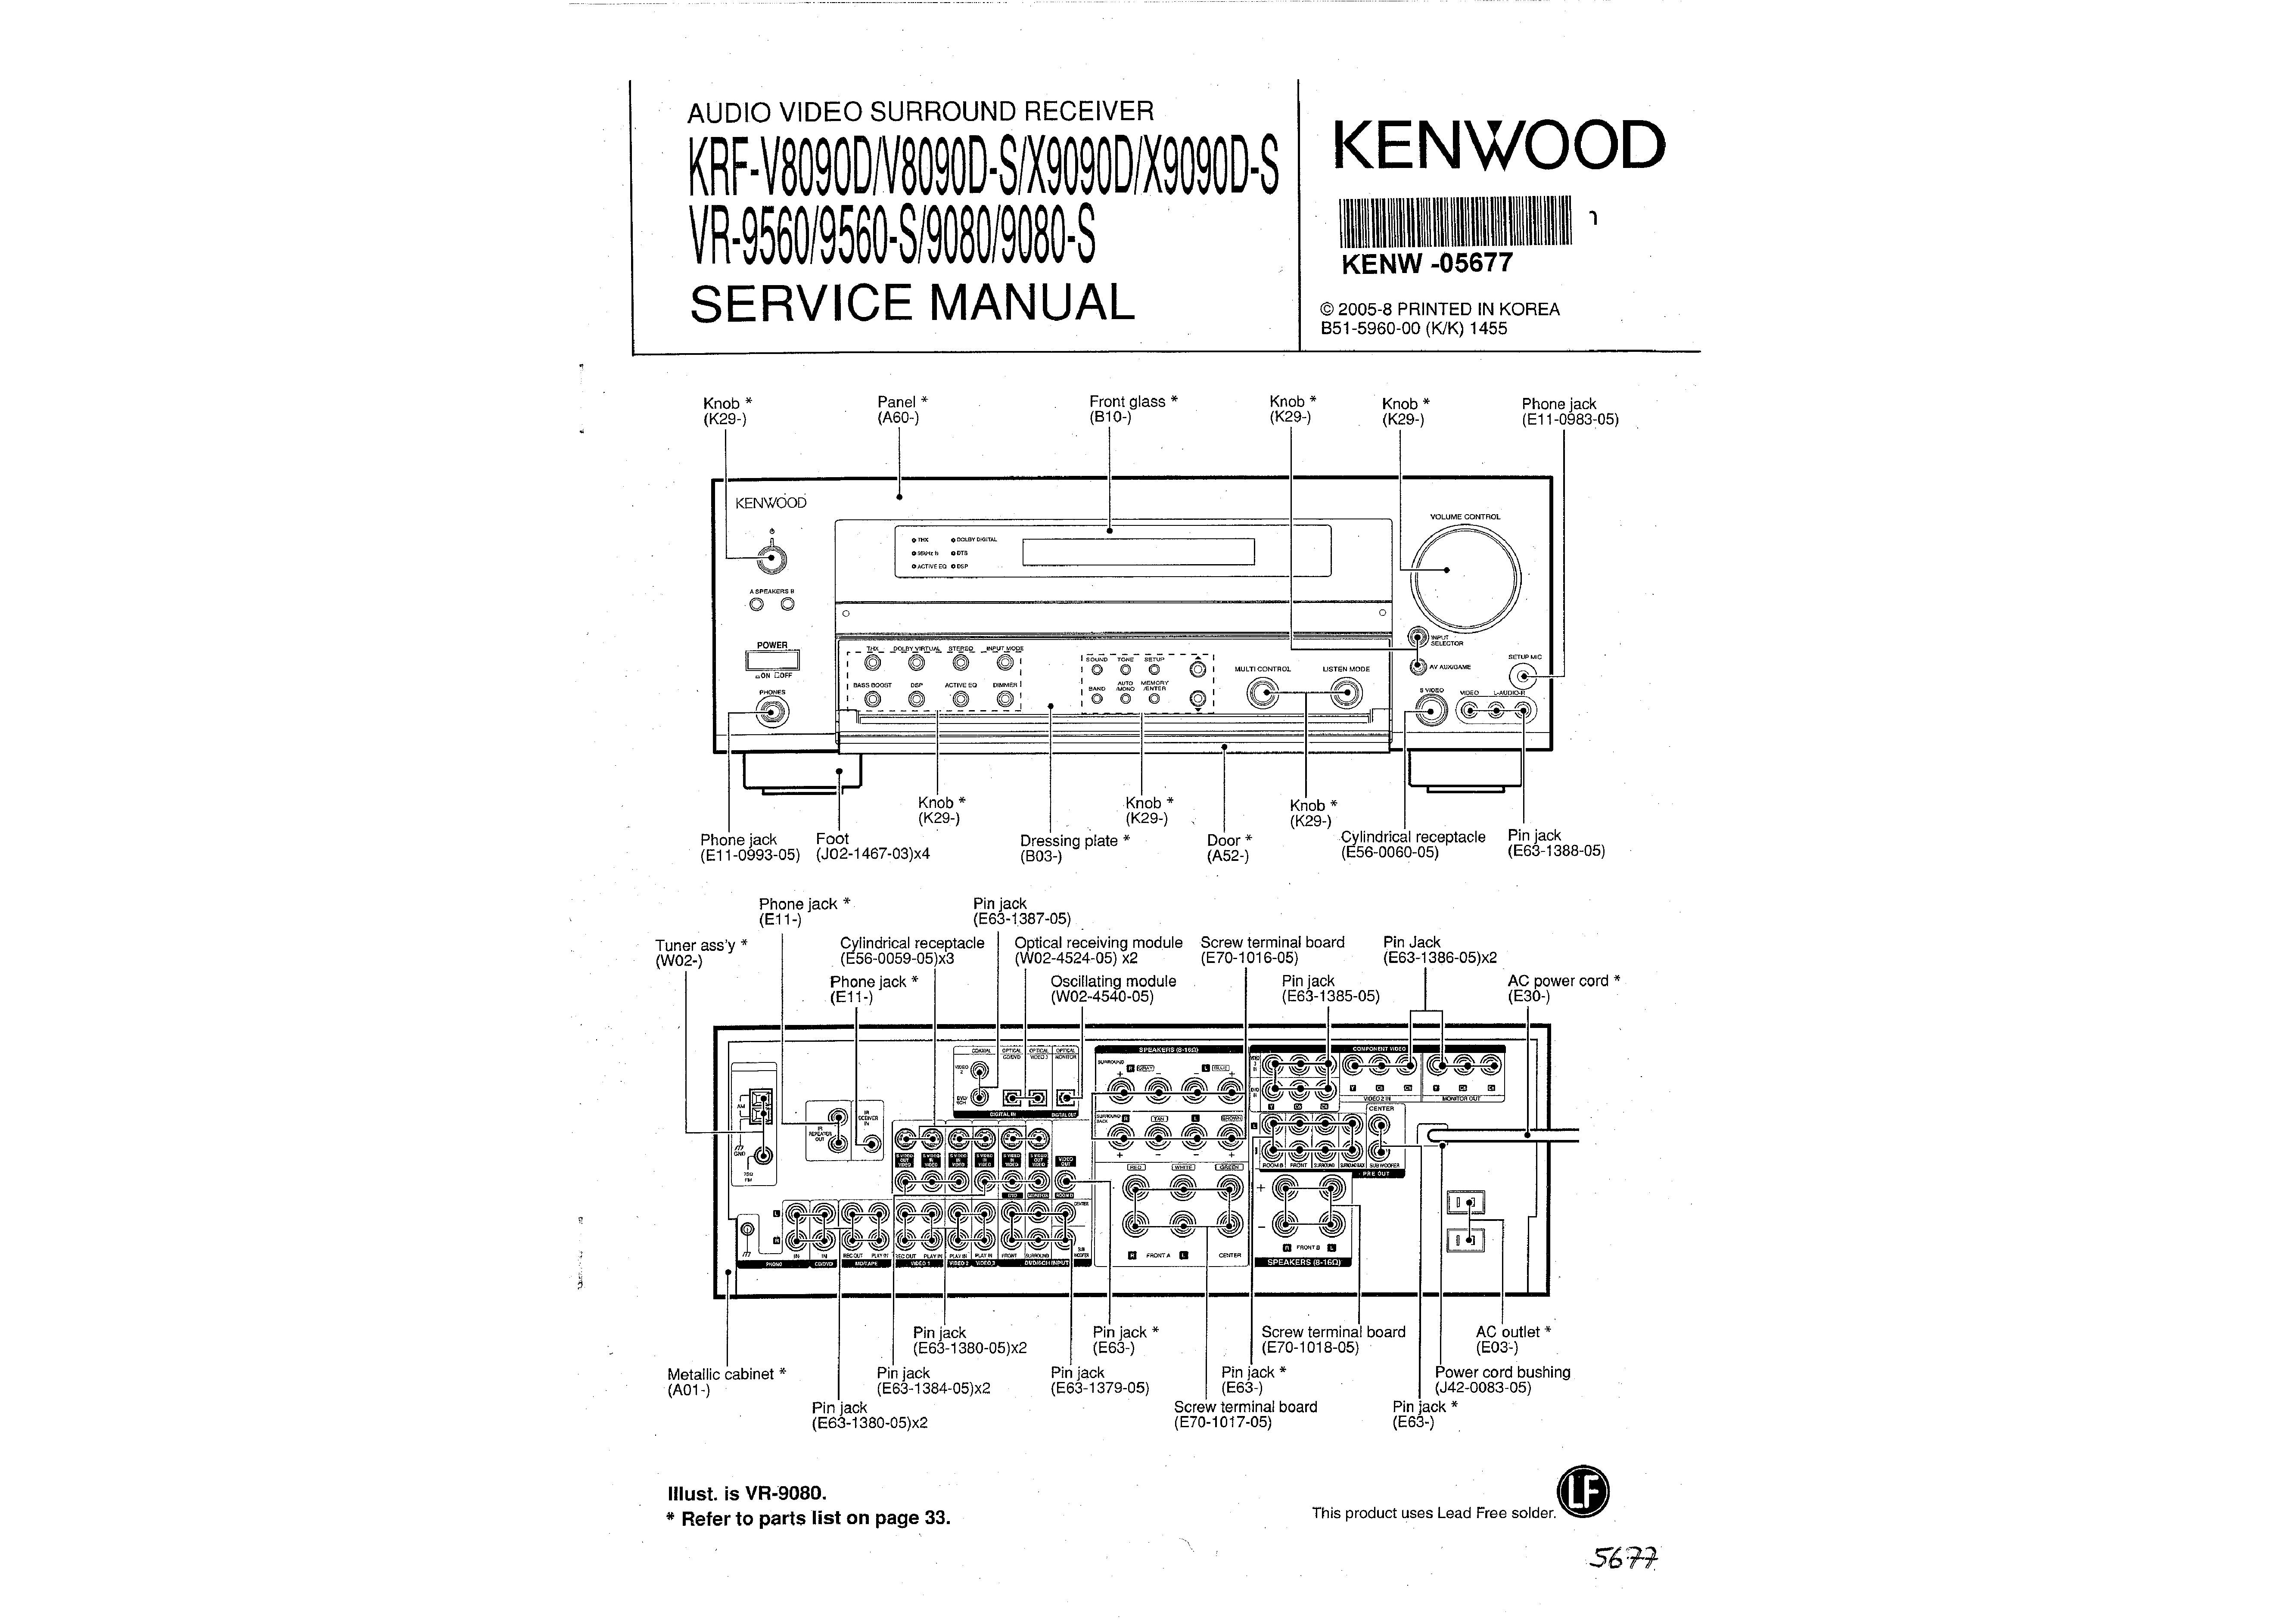 Kenwood VR-9560